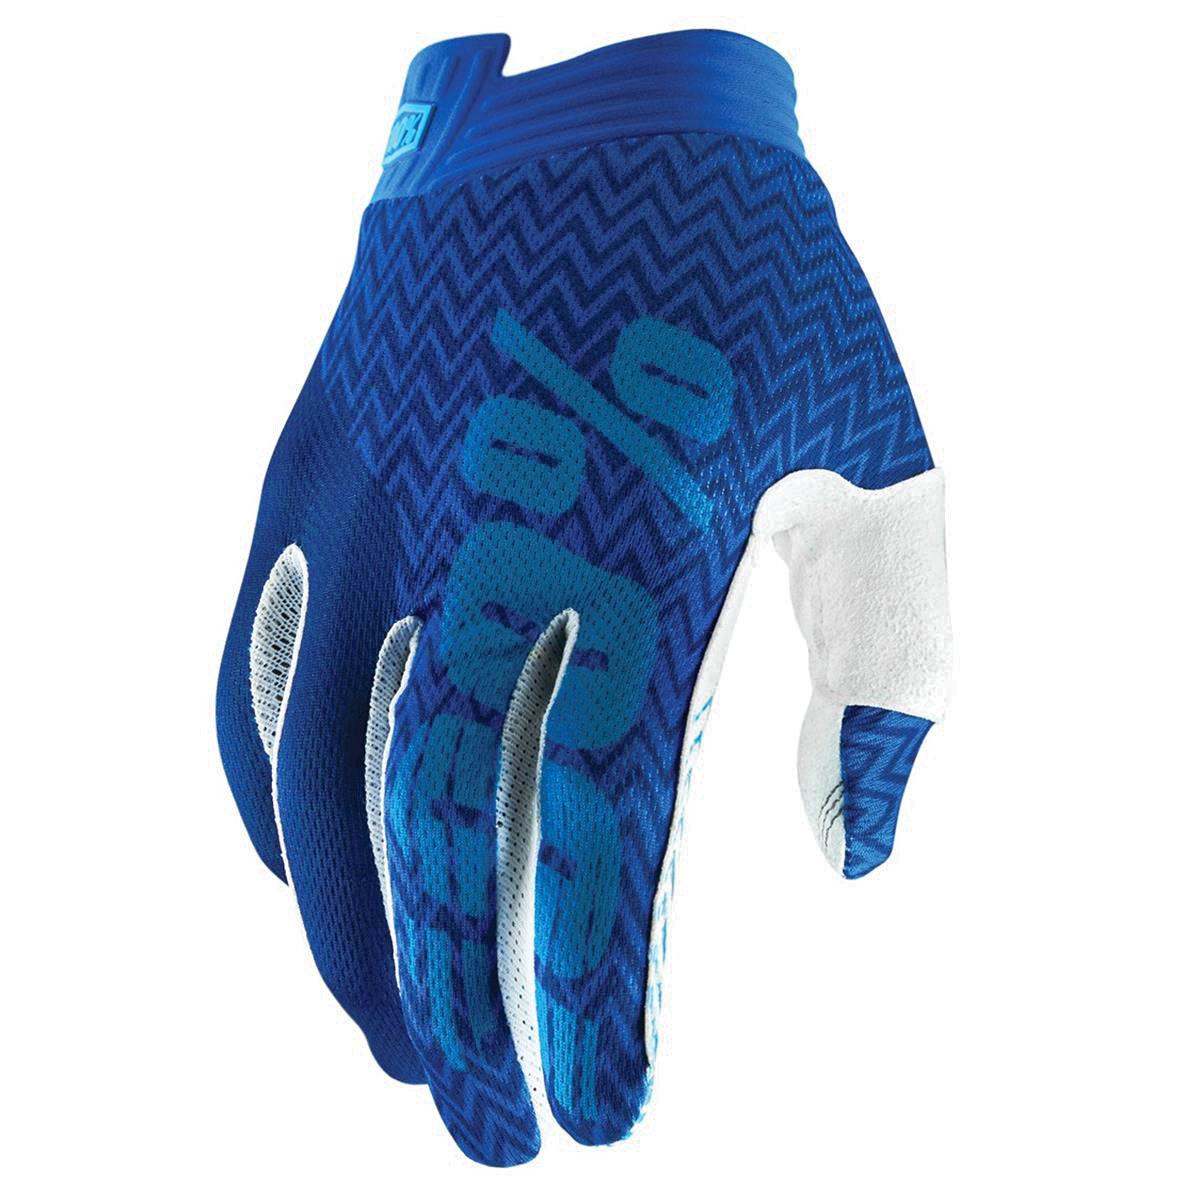 100% MTB-Handschuhe iTrack Blau/Navy